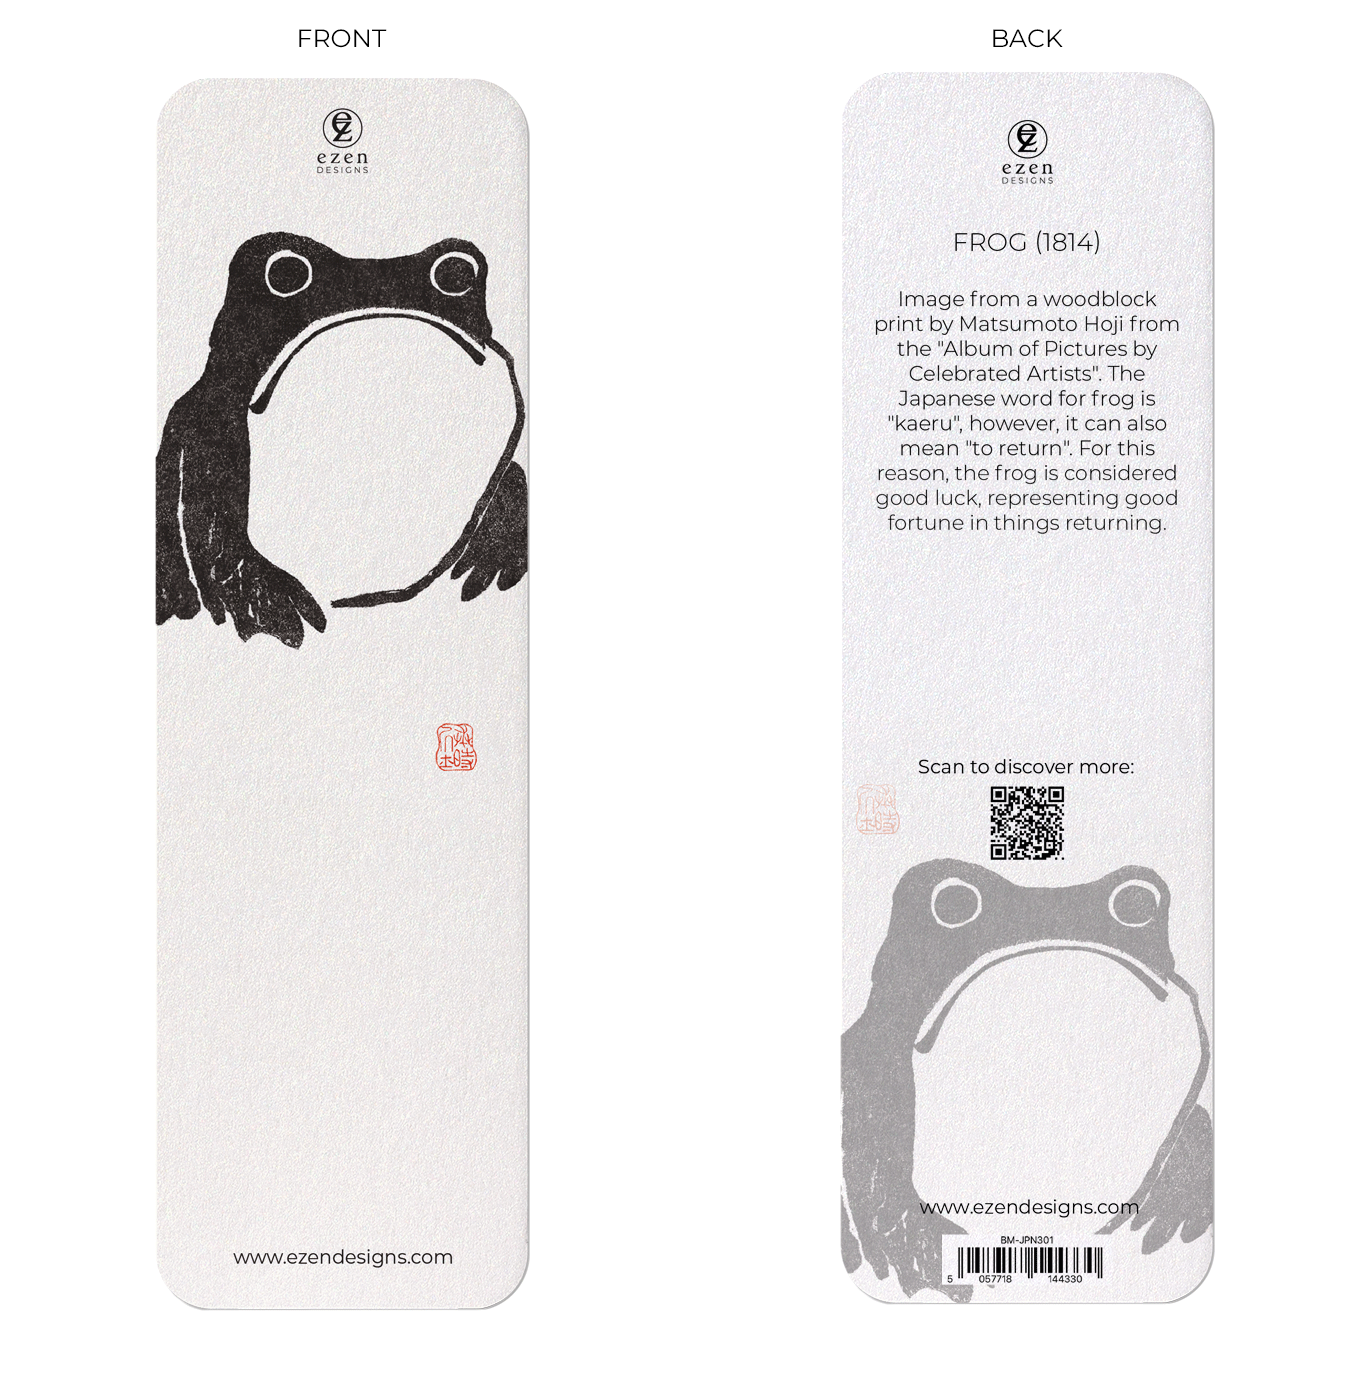 7 Bookmarks - Japanese Ezen Frog Designs